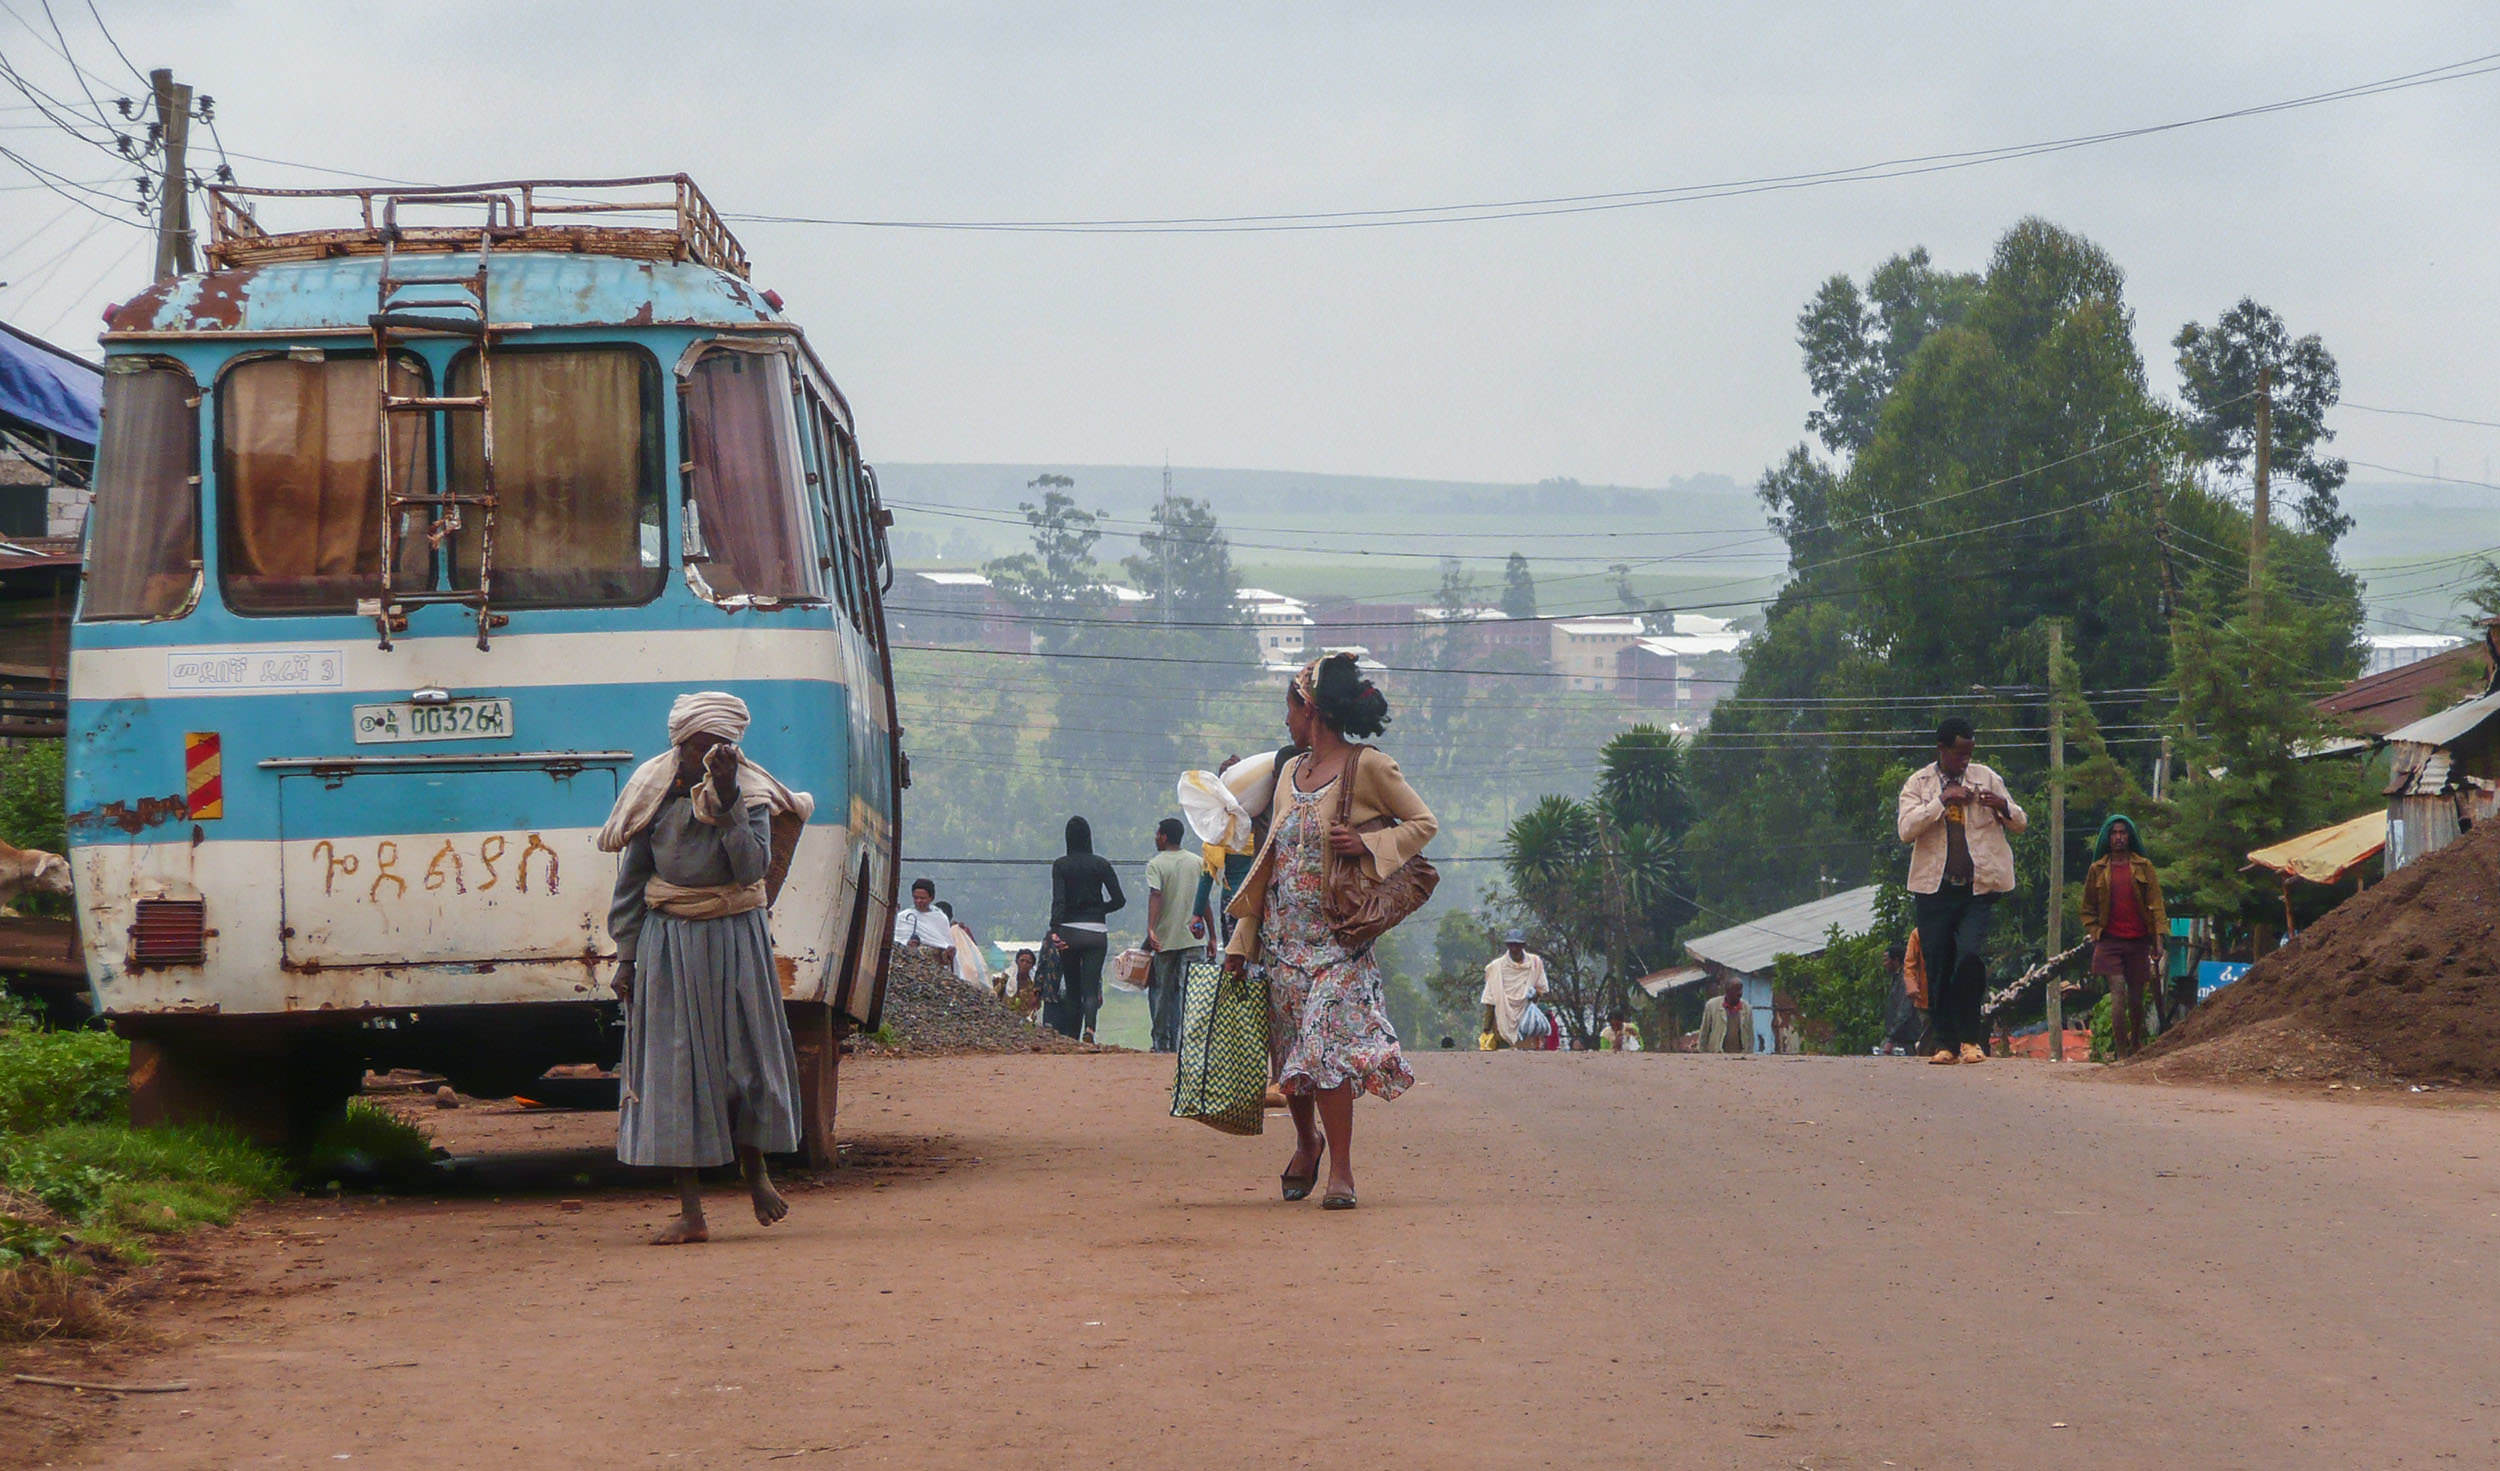 Blue bas parked on roadside in town near Bahir Dar Ethiopia